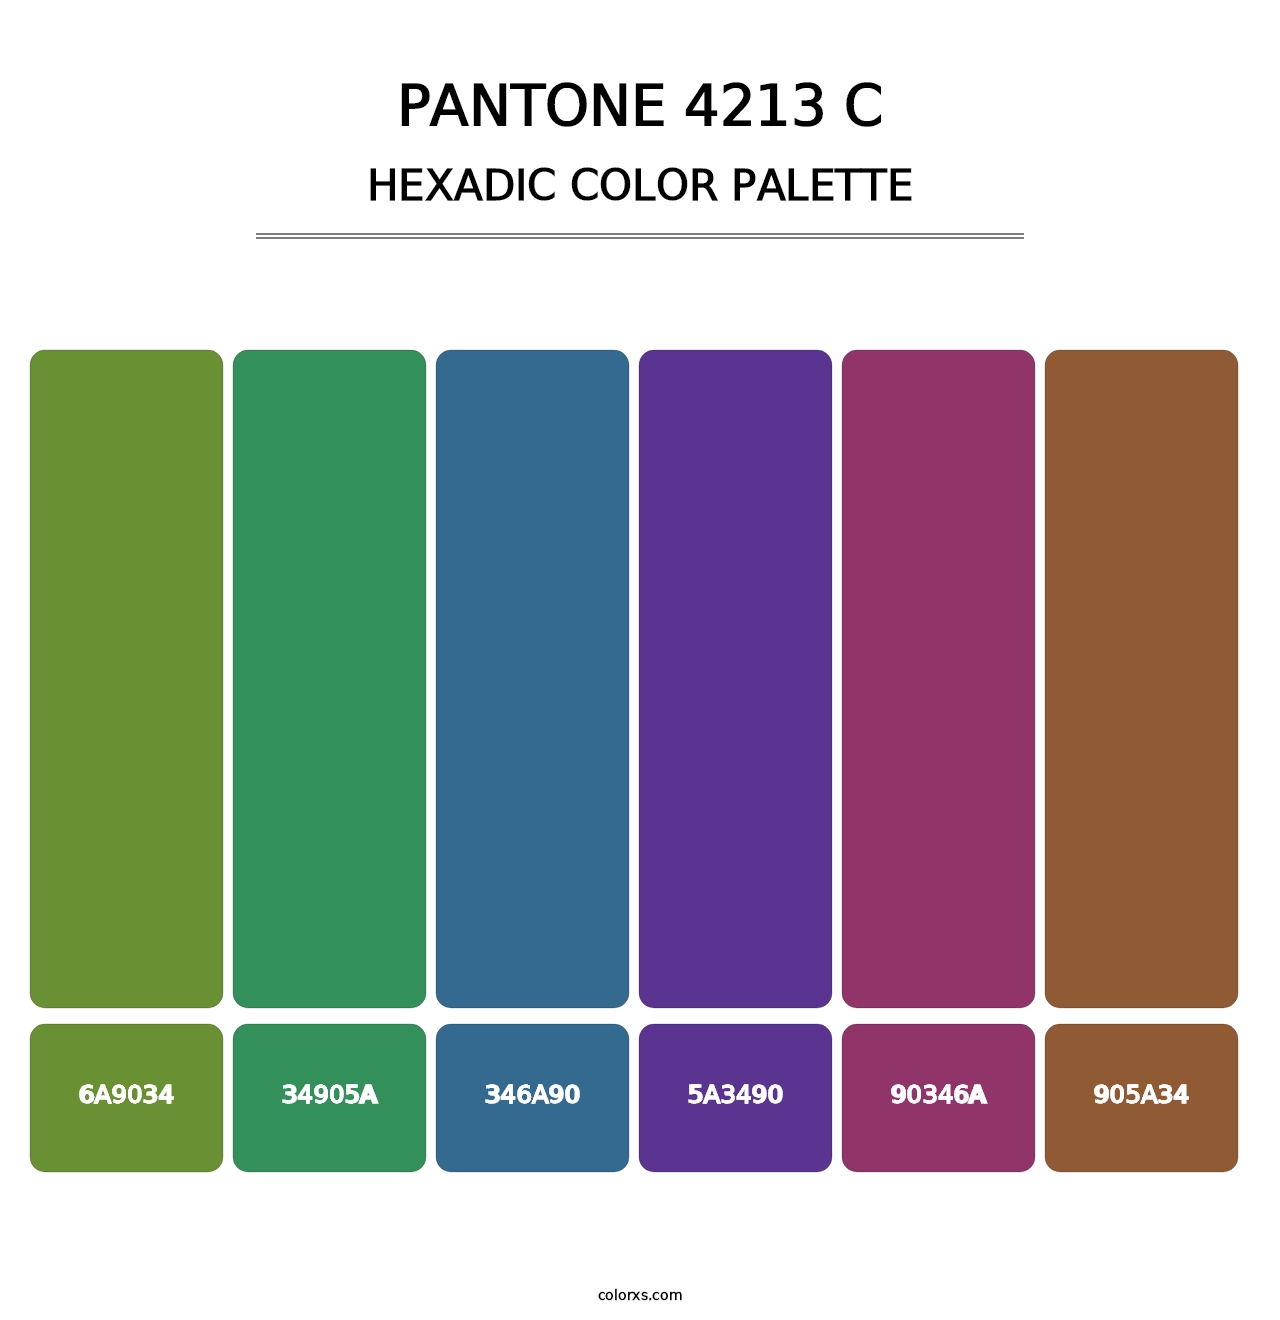 PANTONE 4213 C - Hexadic Color Palette